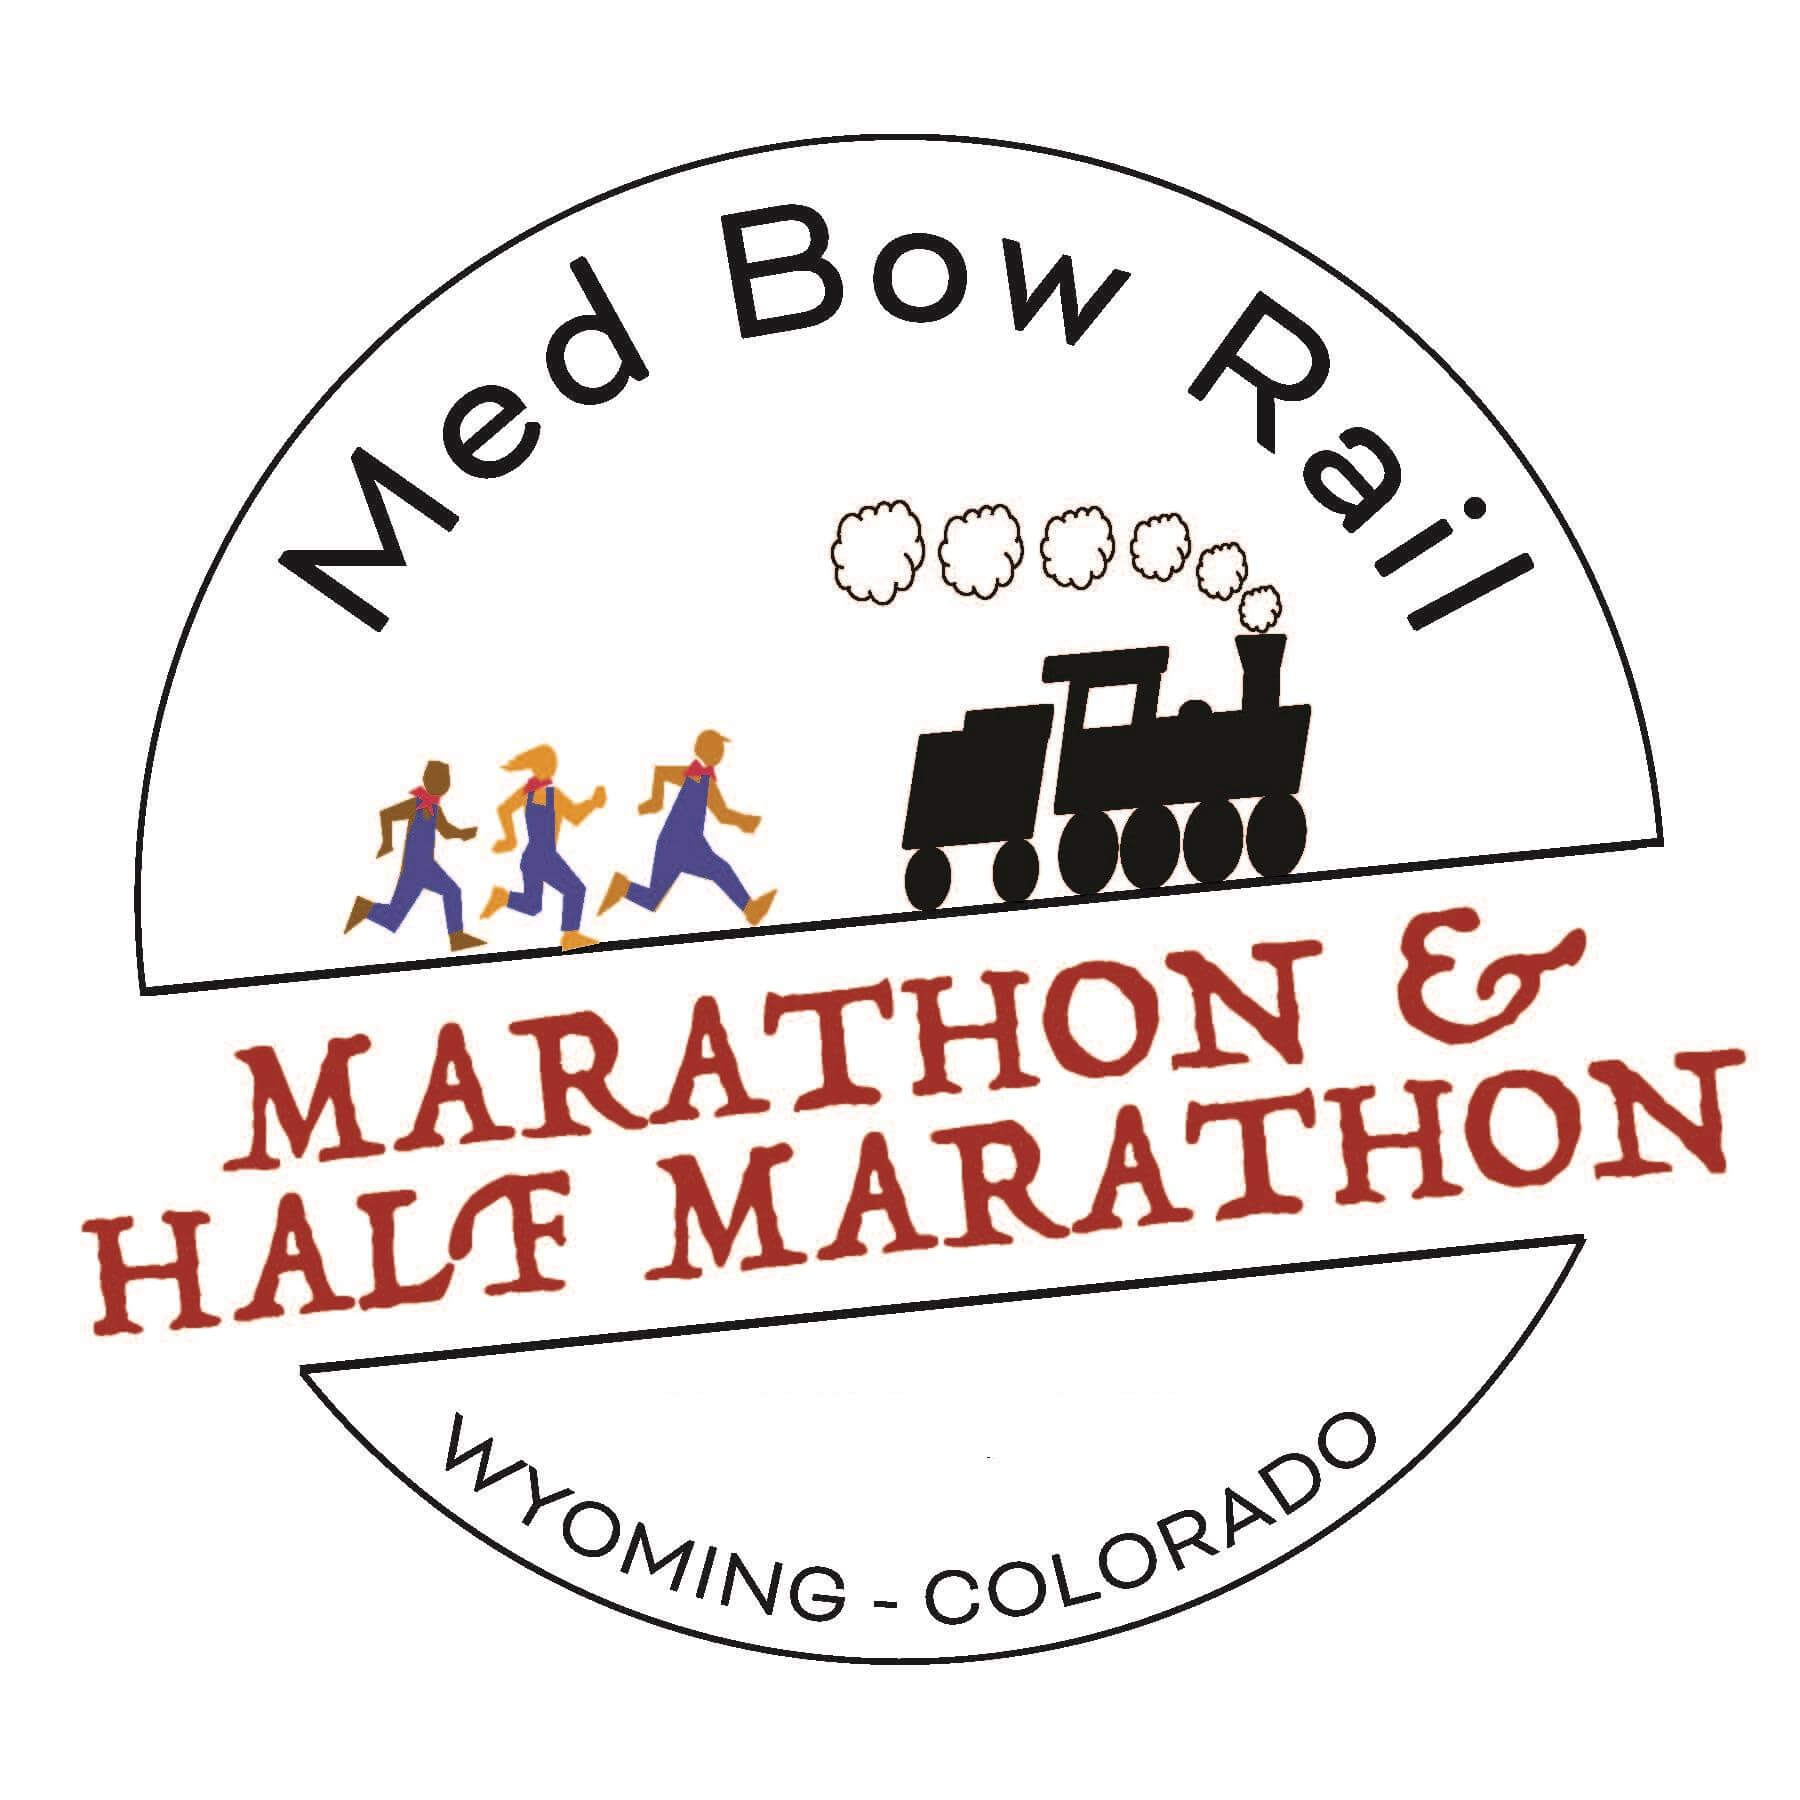 med-bow-rail-marathon-and-half-marathon-logo_vUqfhgM